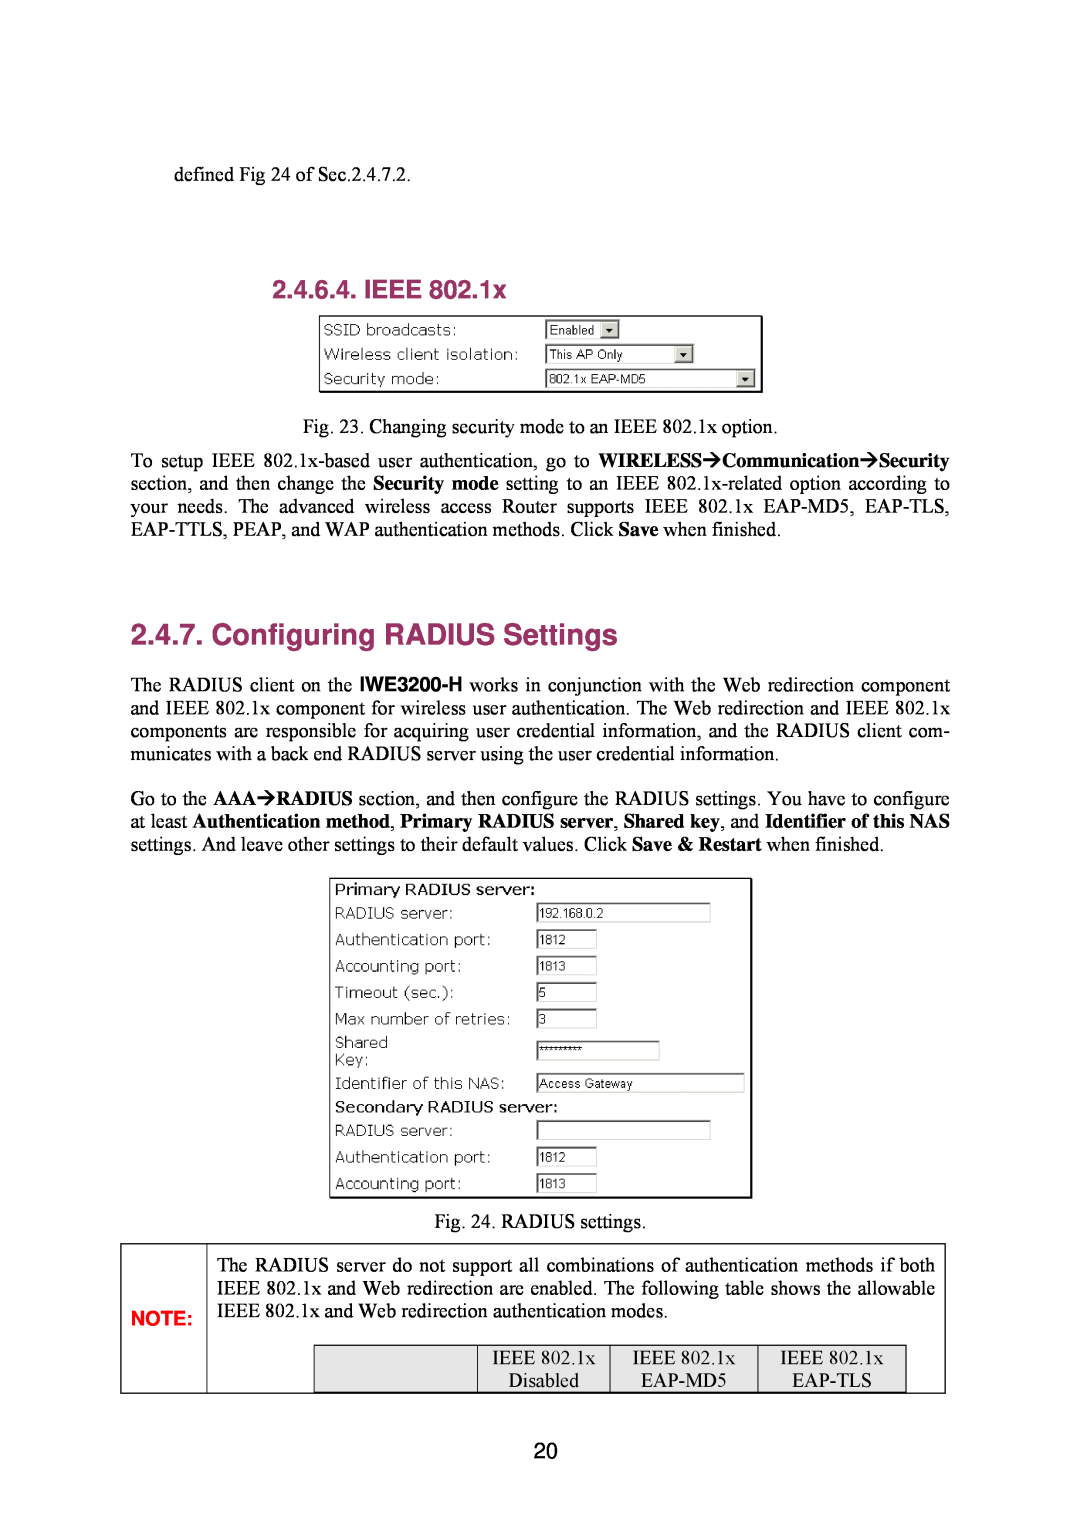 Epson IWE3200-H manual Configuring RADIUS Settings, Ieee 